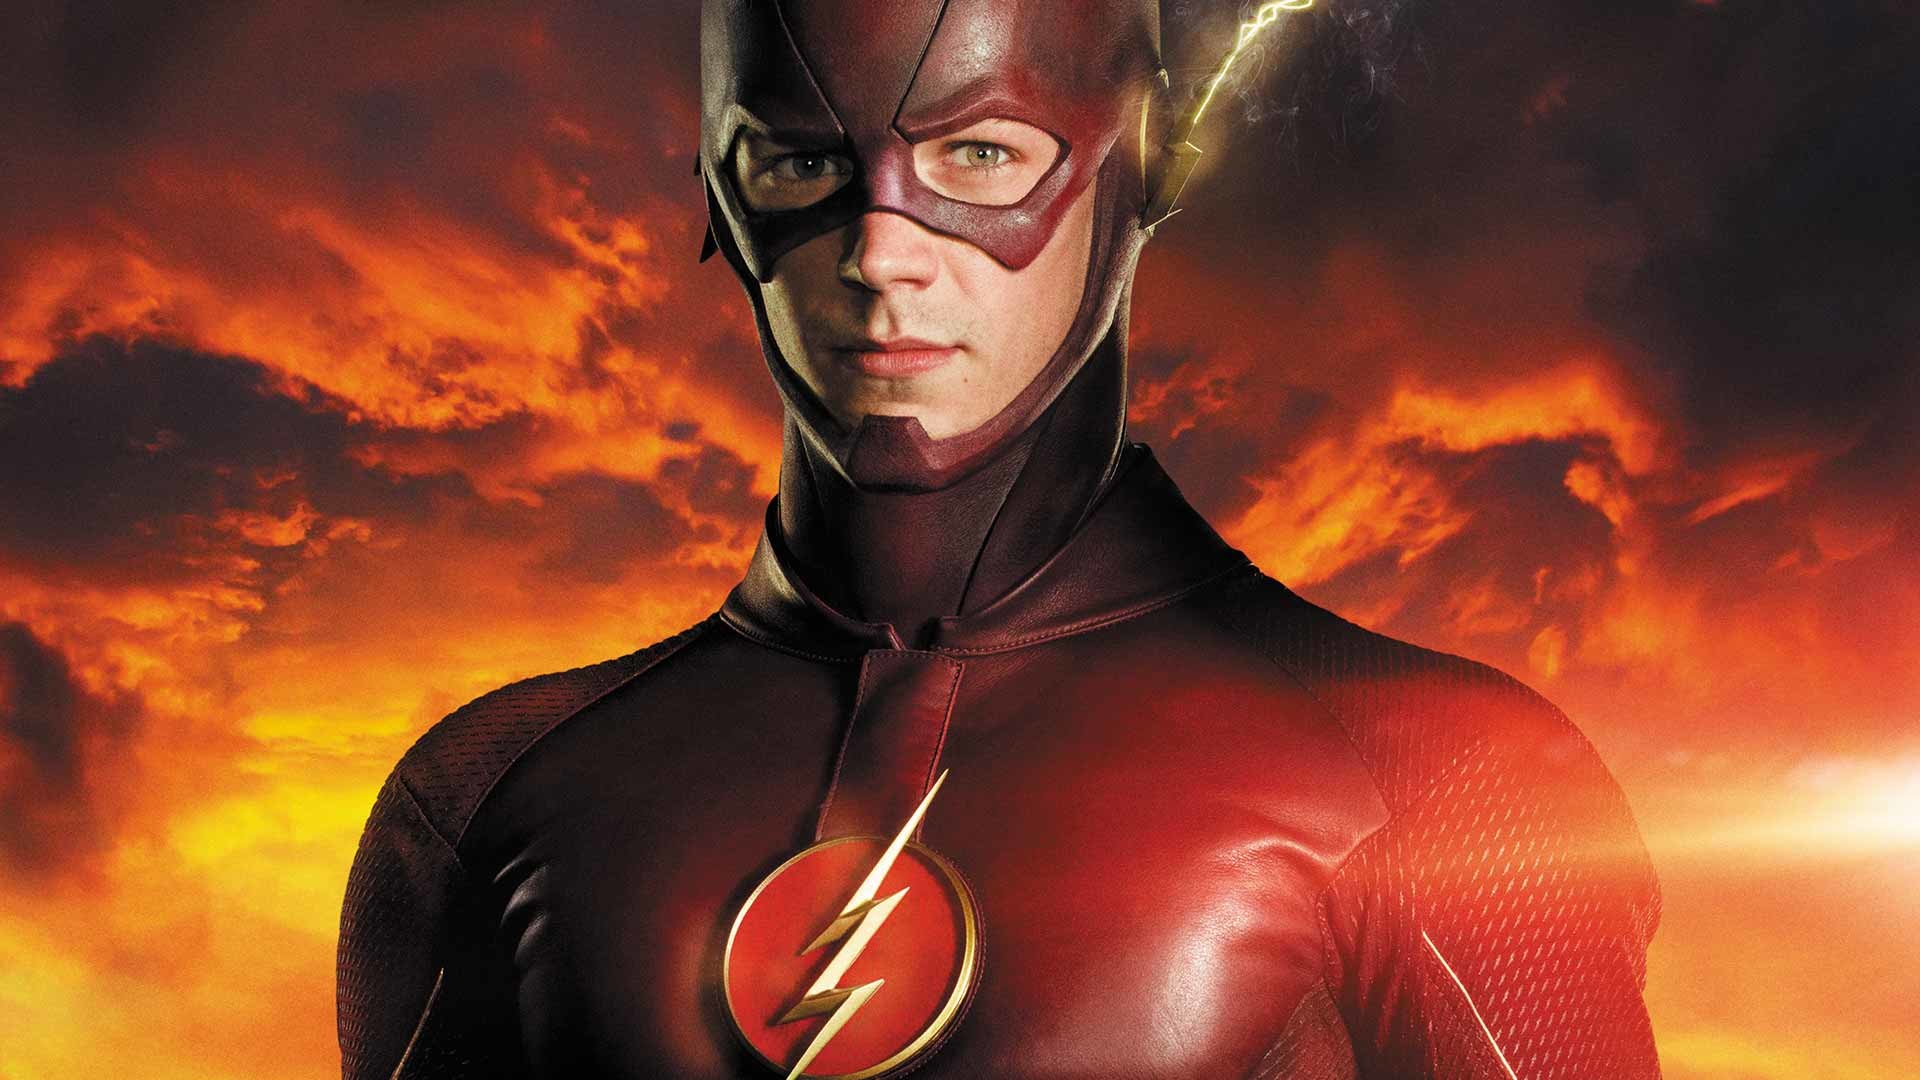 1920x1080 Syfy -The Flash Season 4 premiere title may hint at comic-influenced story  | The Flash Season 4 premiere title may hint at comic-influenced story